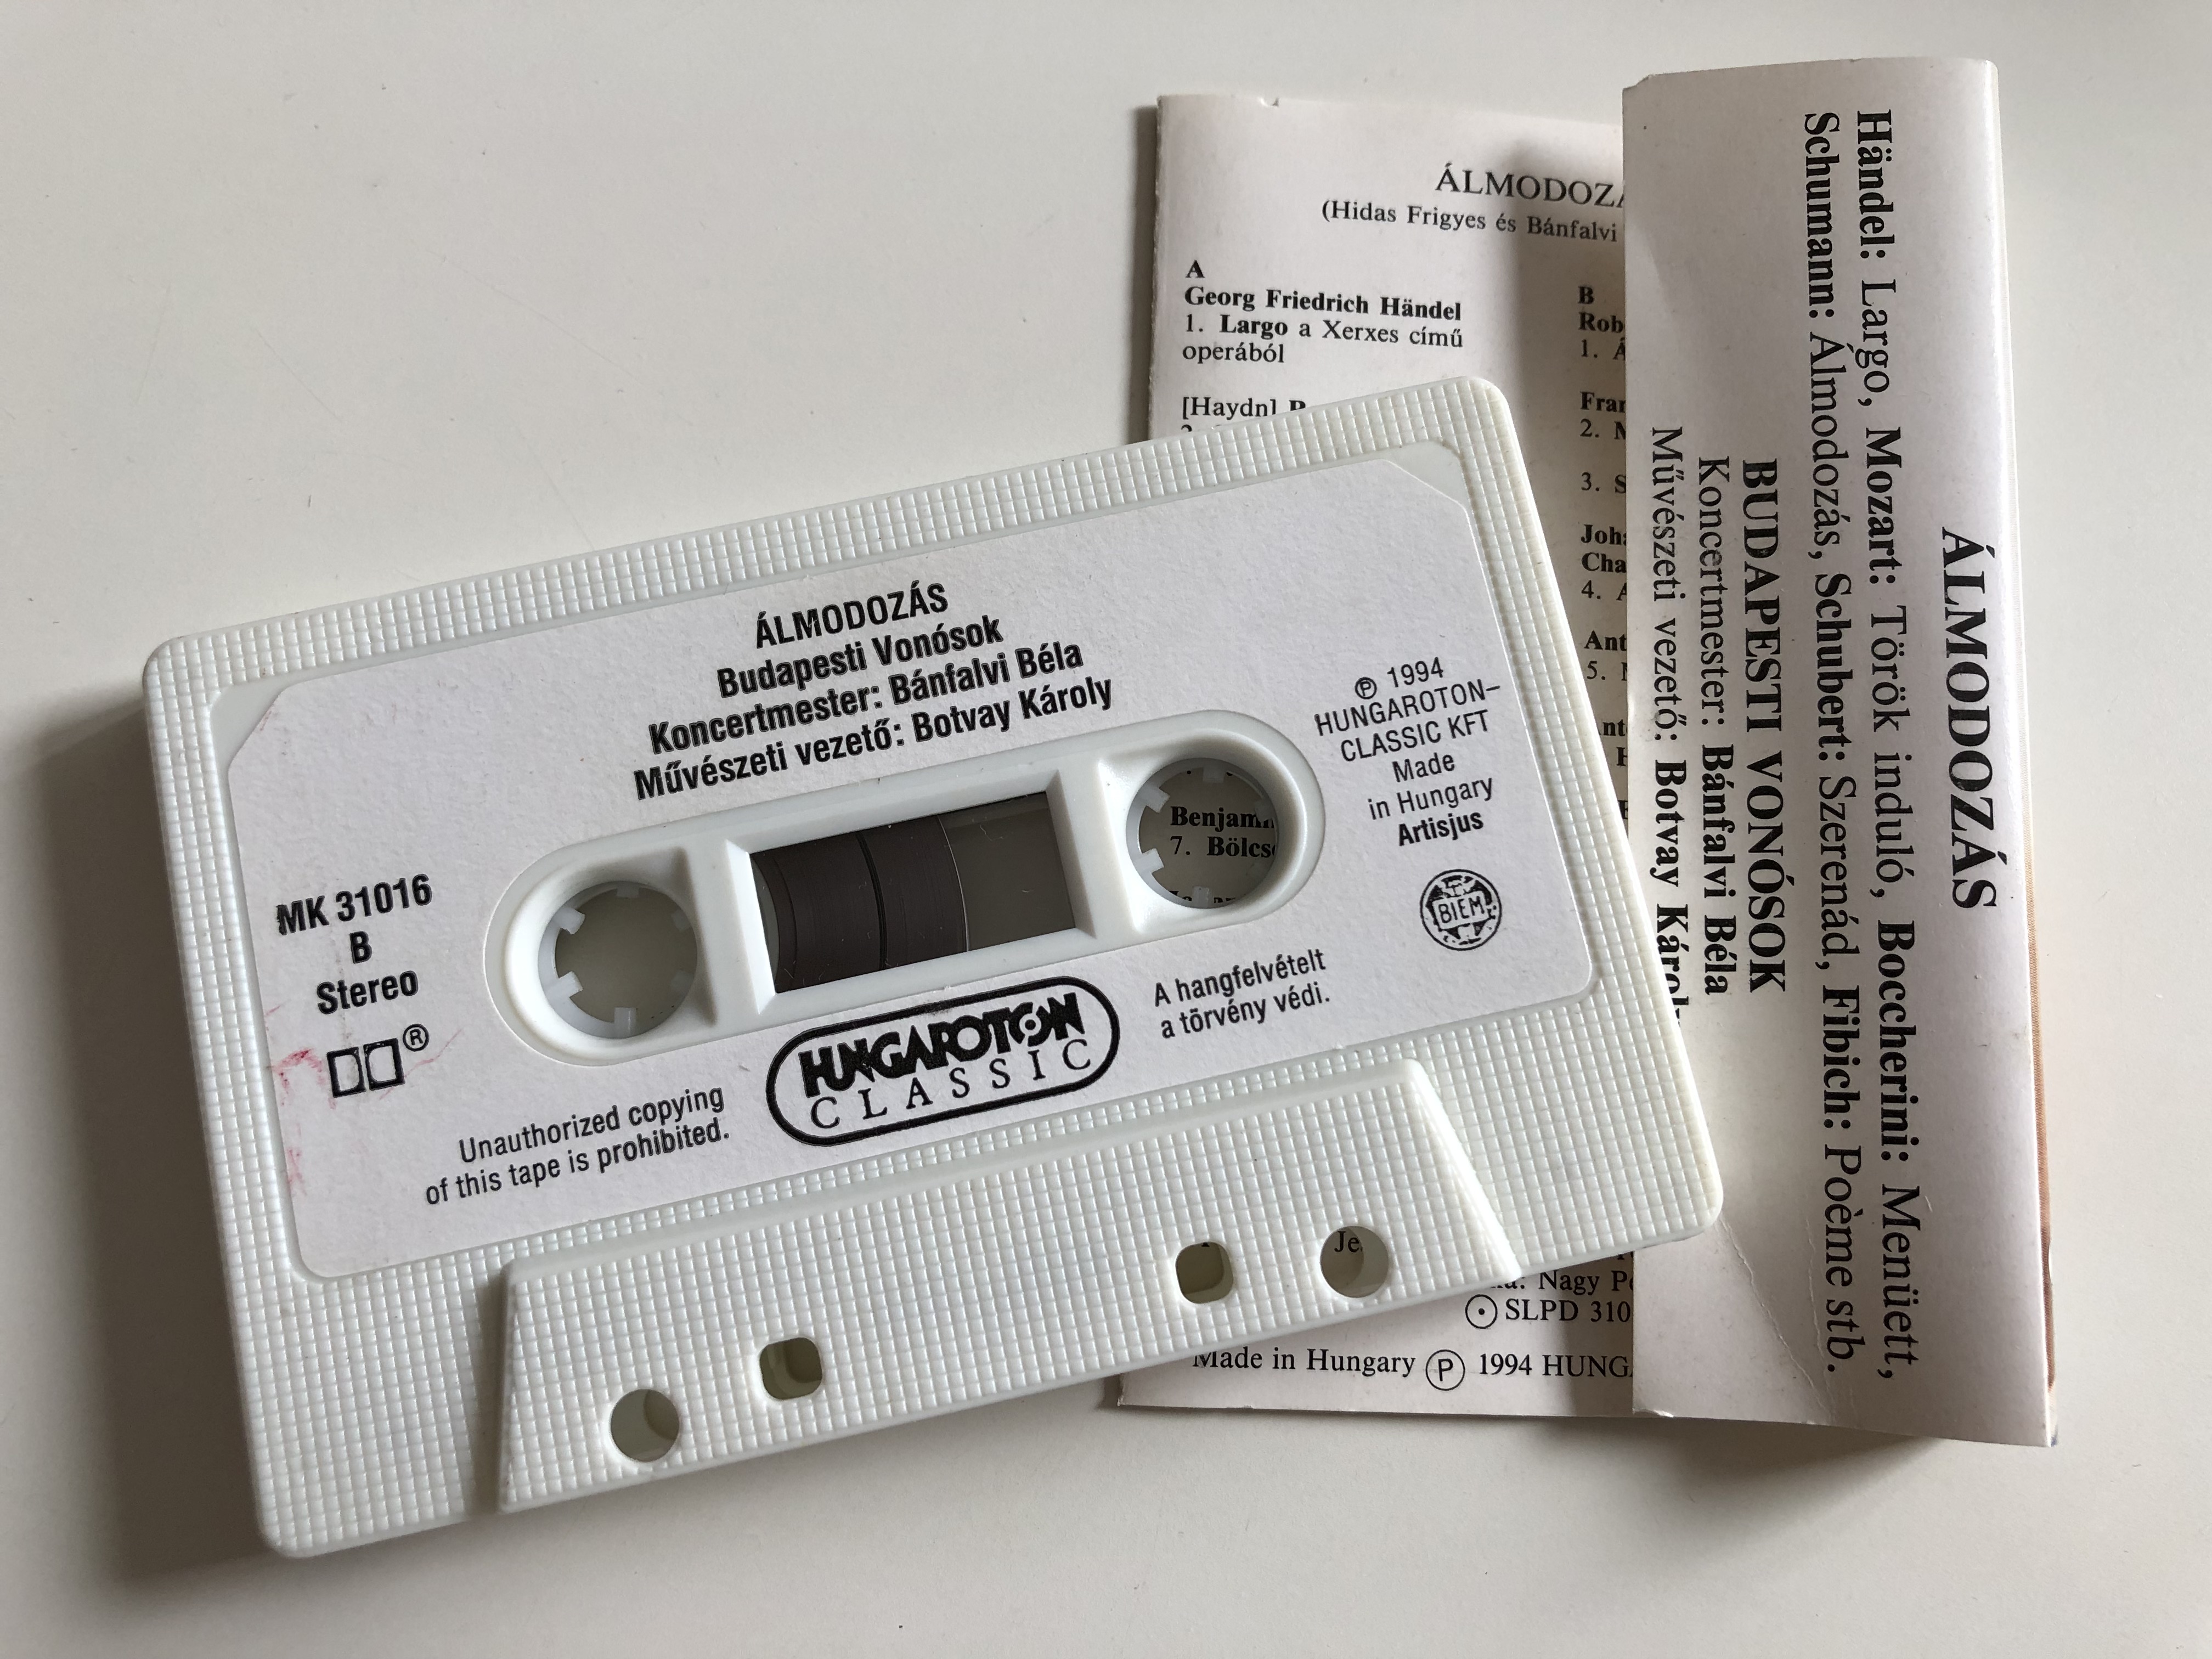 -lmodoz-s-h-ndel-schumann-schubert-rubinstein-dvo-k-fibich-budapesti-von-sok-botvay-k-roly-hungaroton-cassette-stereo-mk-31016-3-.jpg